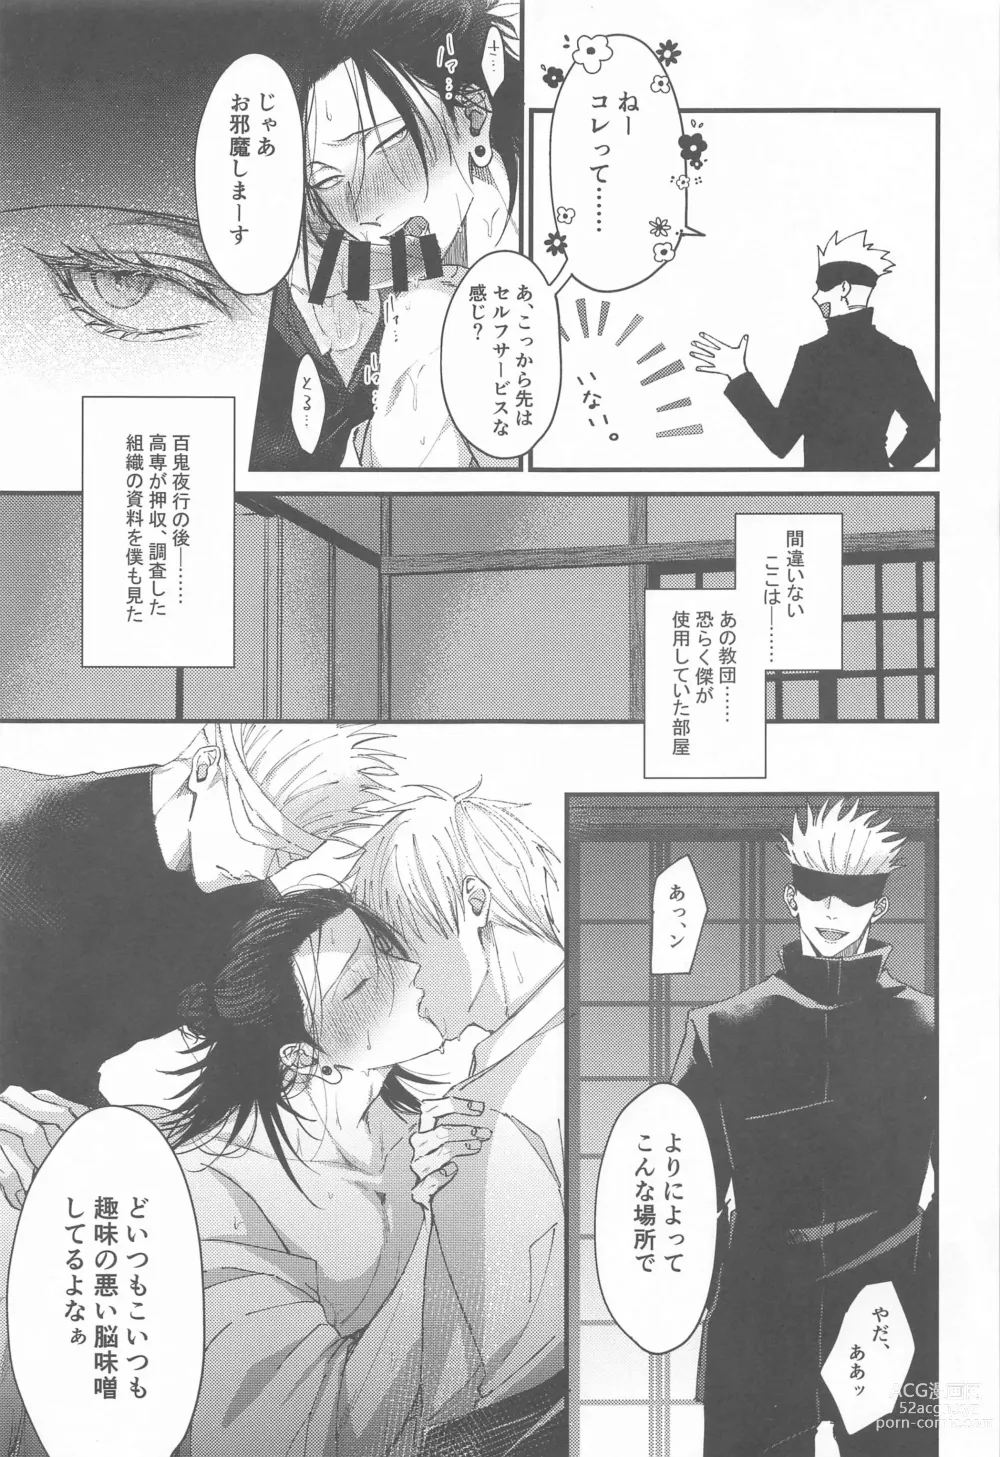 Page 6 of doujinshi Miren no Hakoniwa